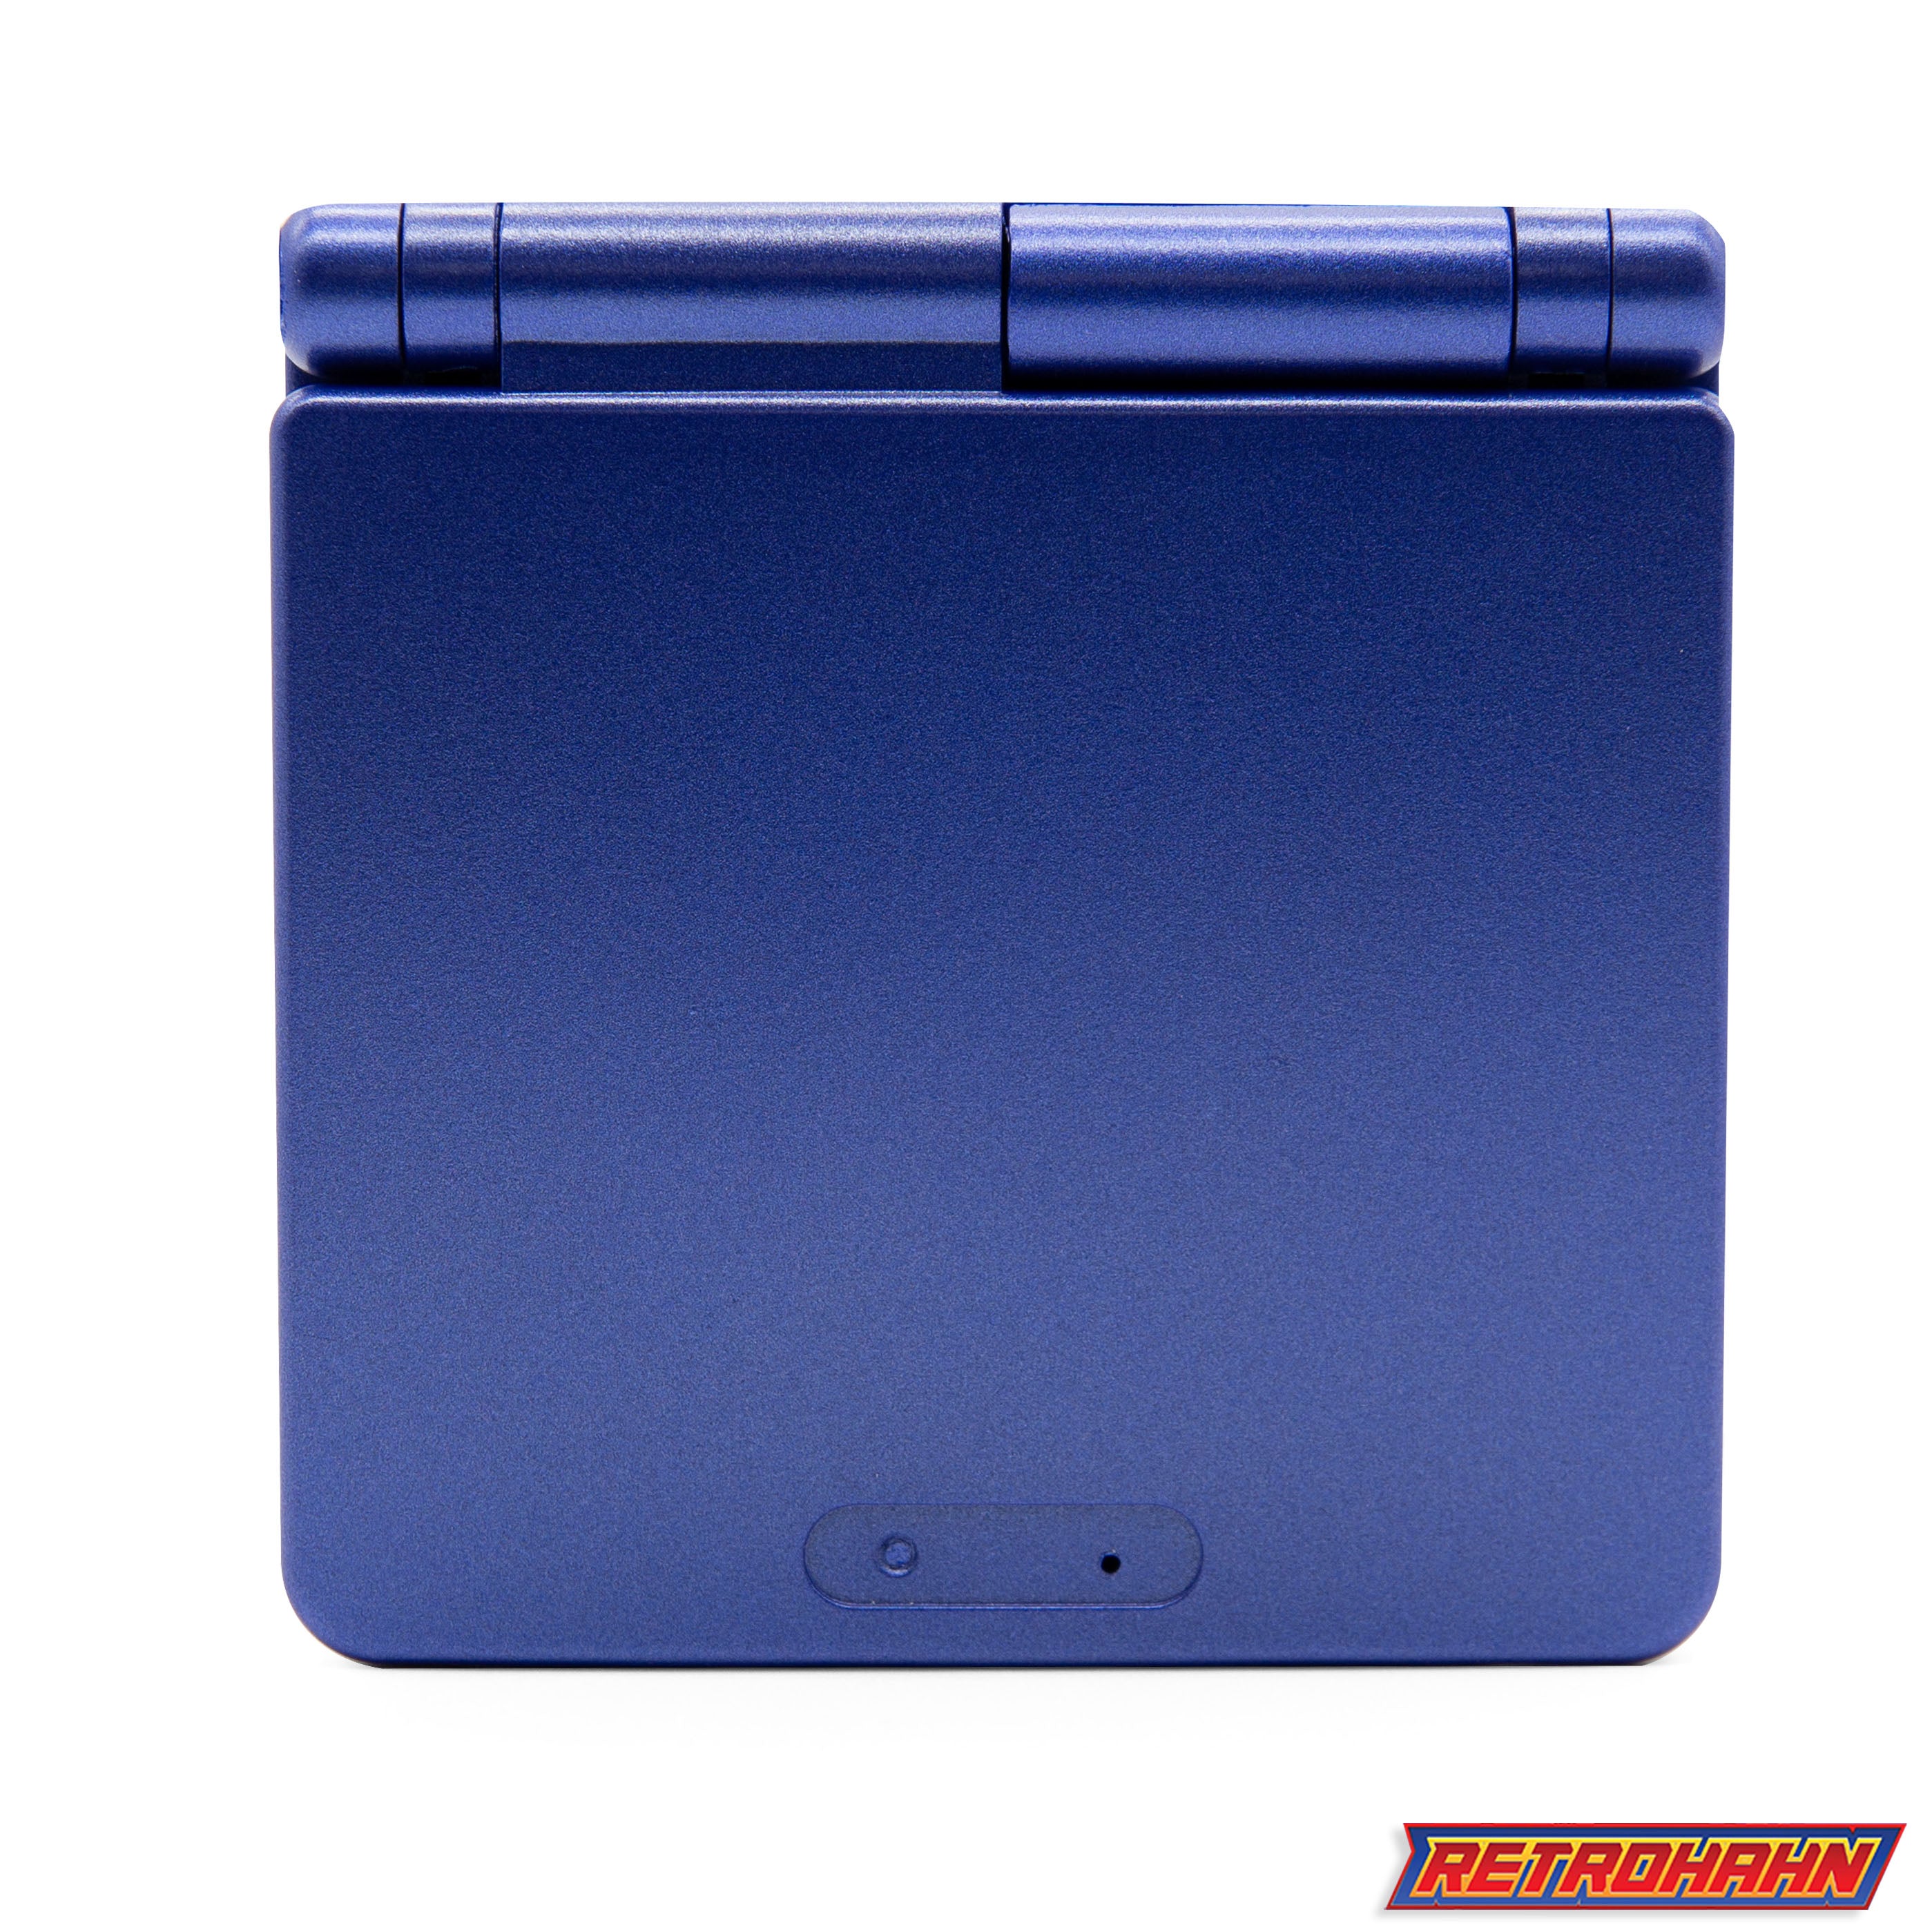 GameBoy Advance SP: caso 